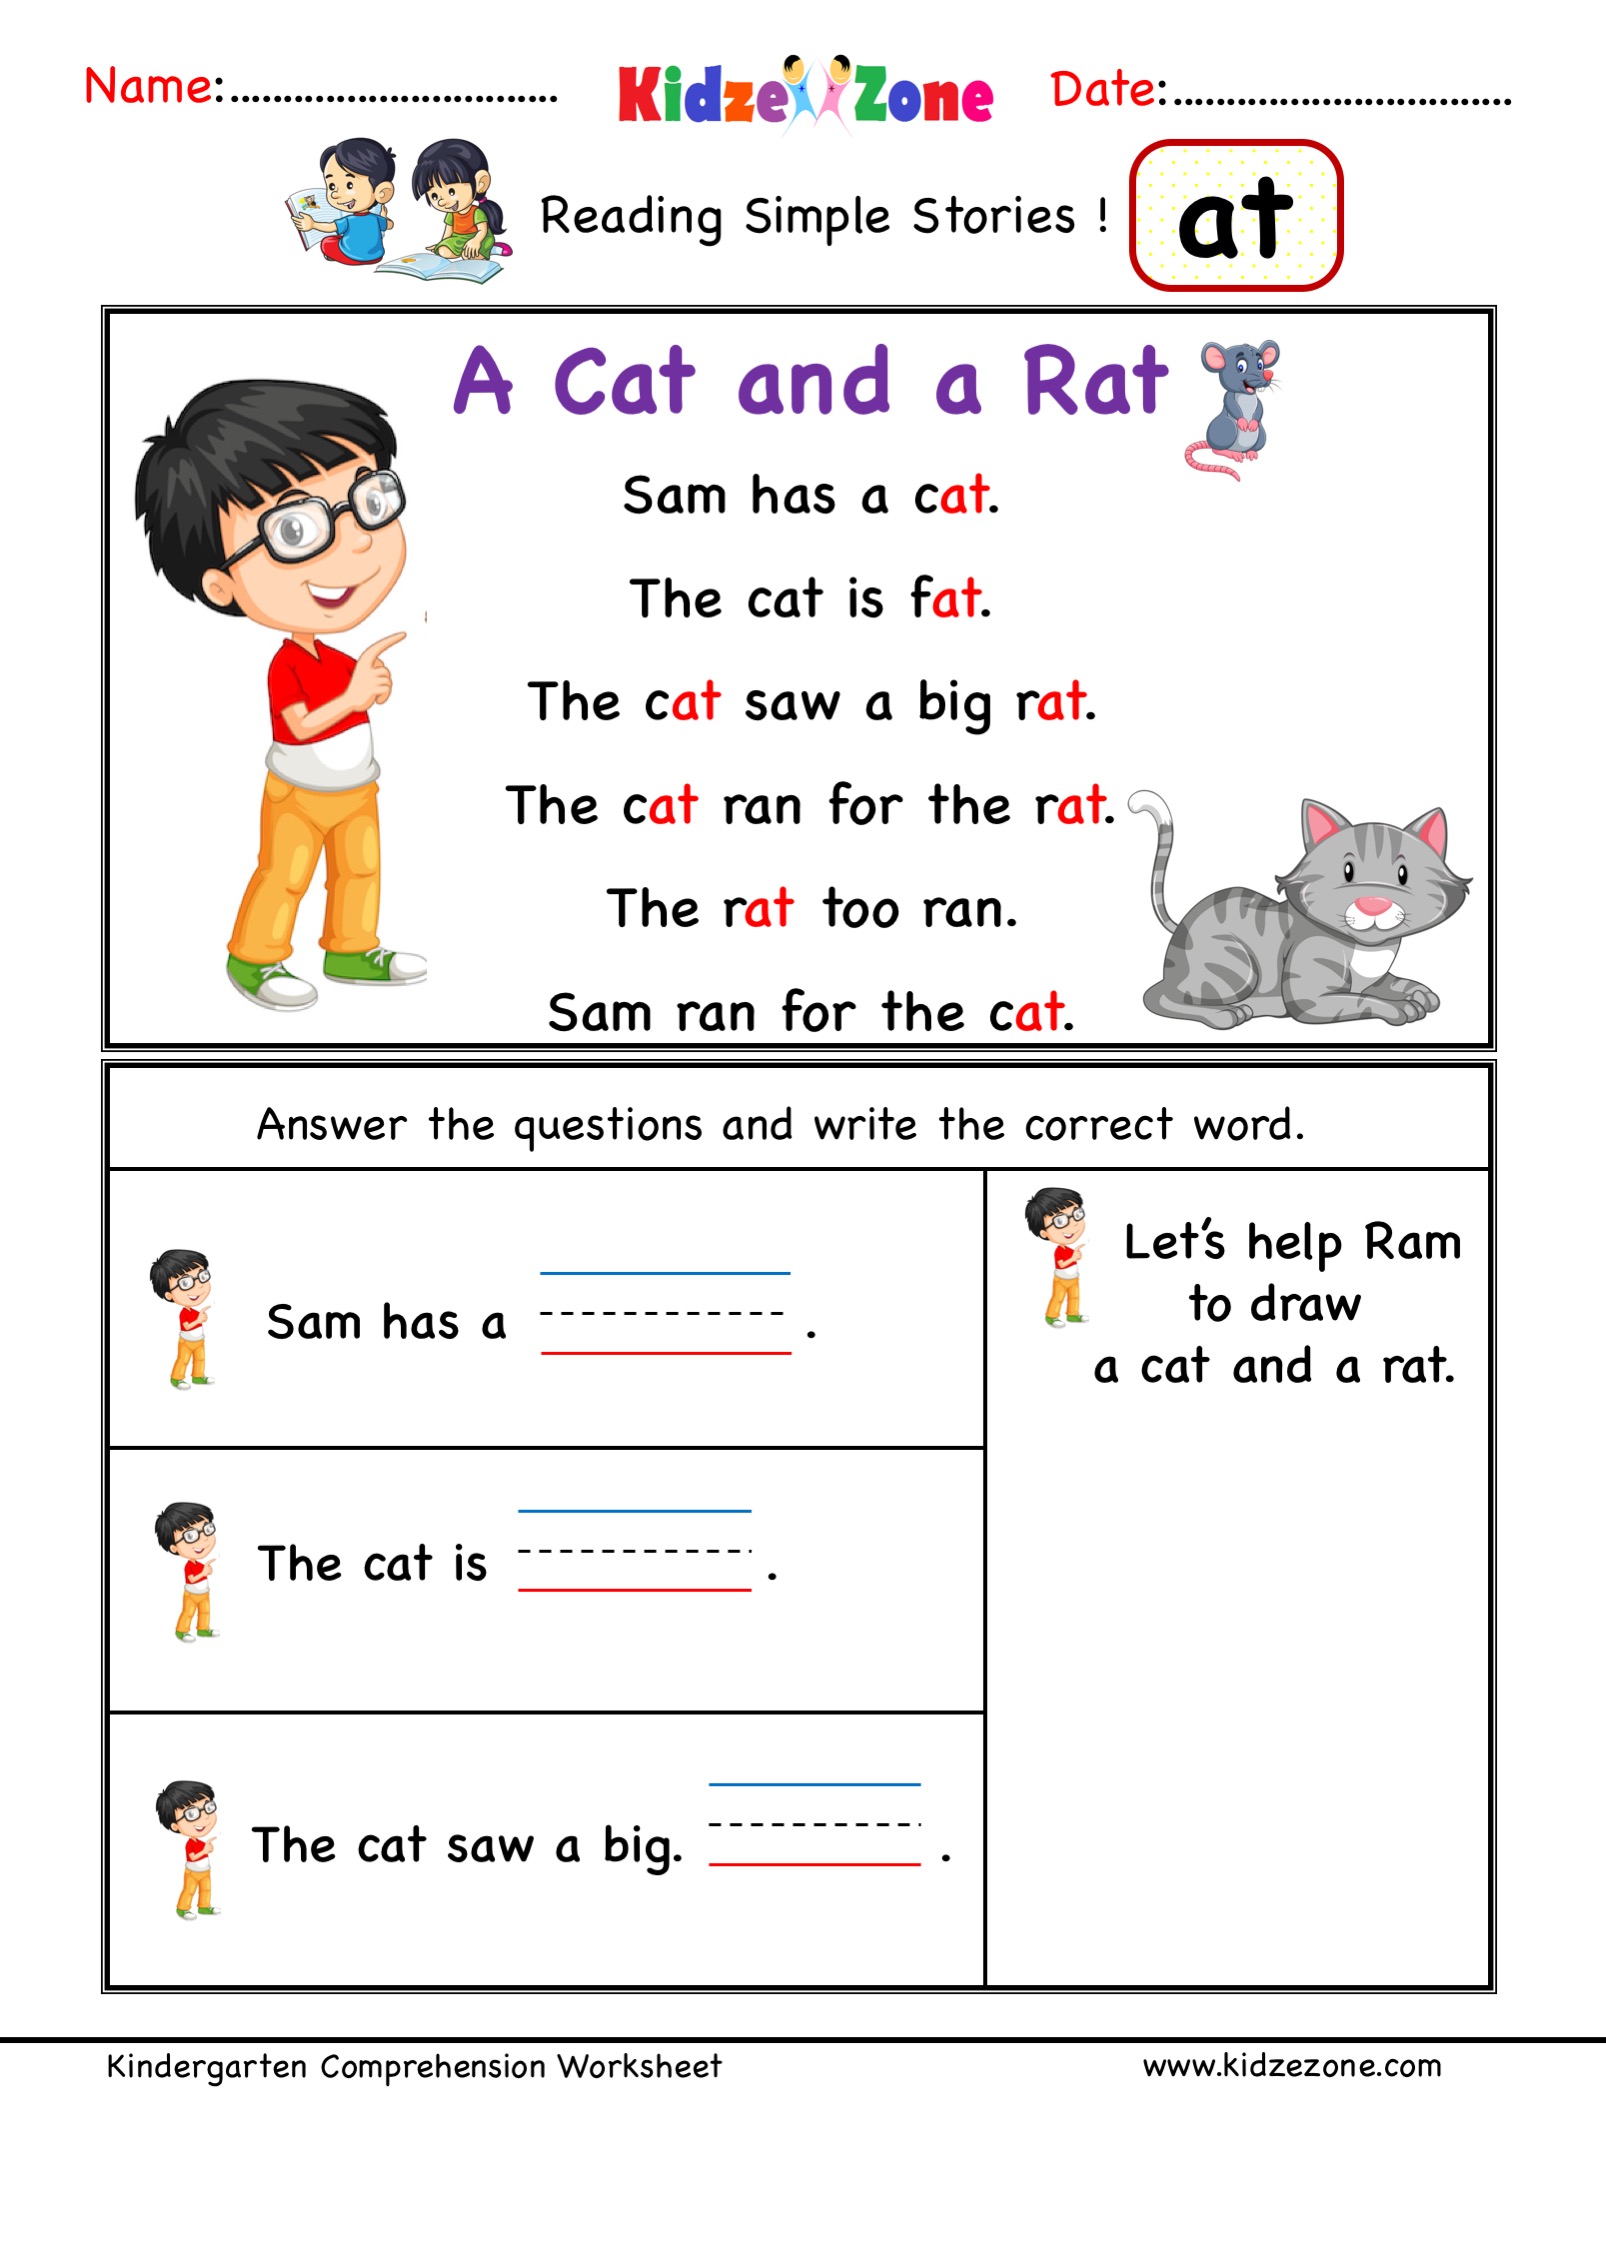 Kindergarten worksheets - at word family reading Comprehension